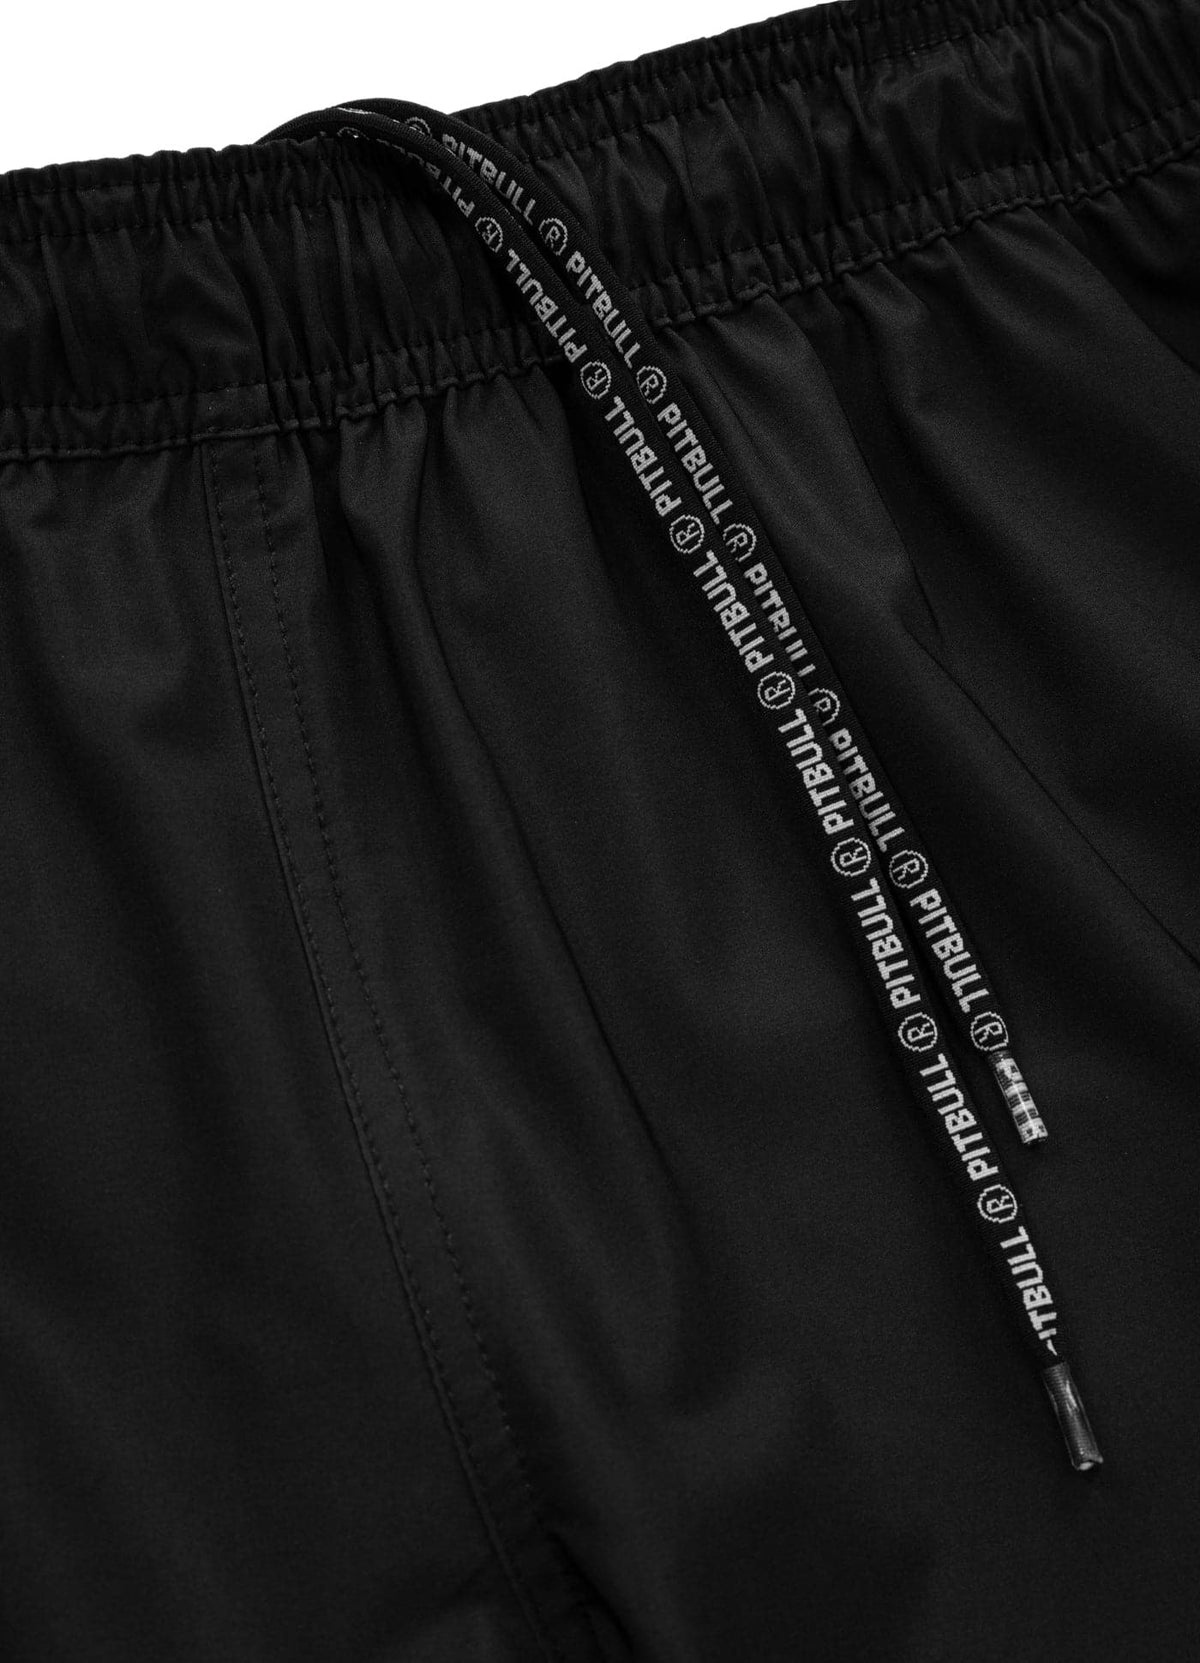 SOLID Inside Black Performance Shorts - Pitbullstore.eu